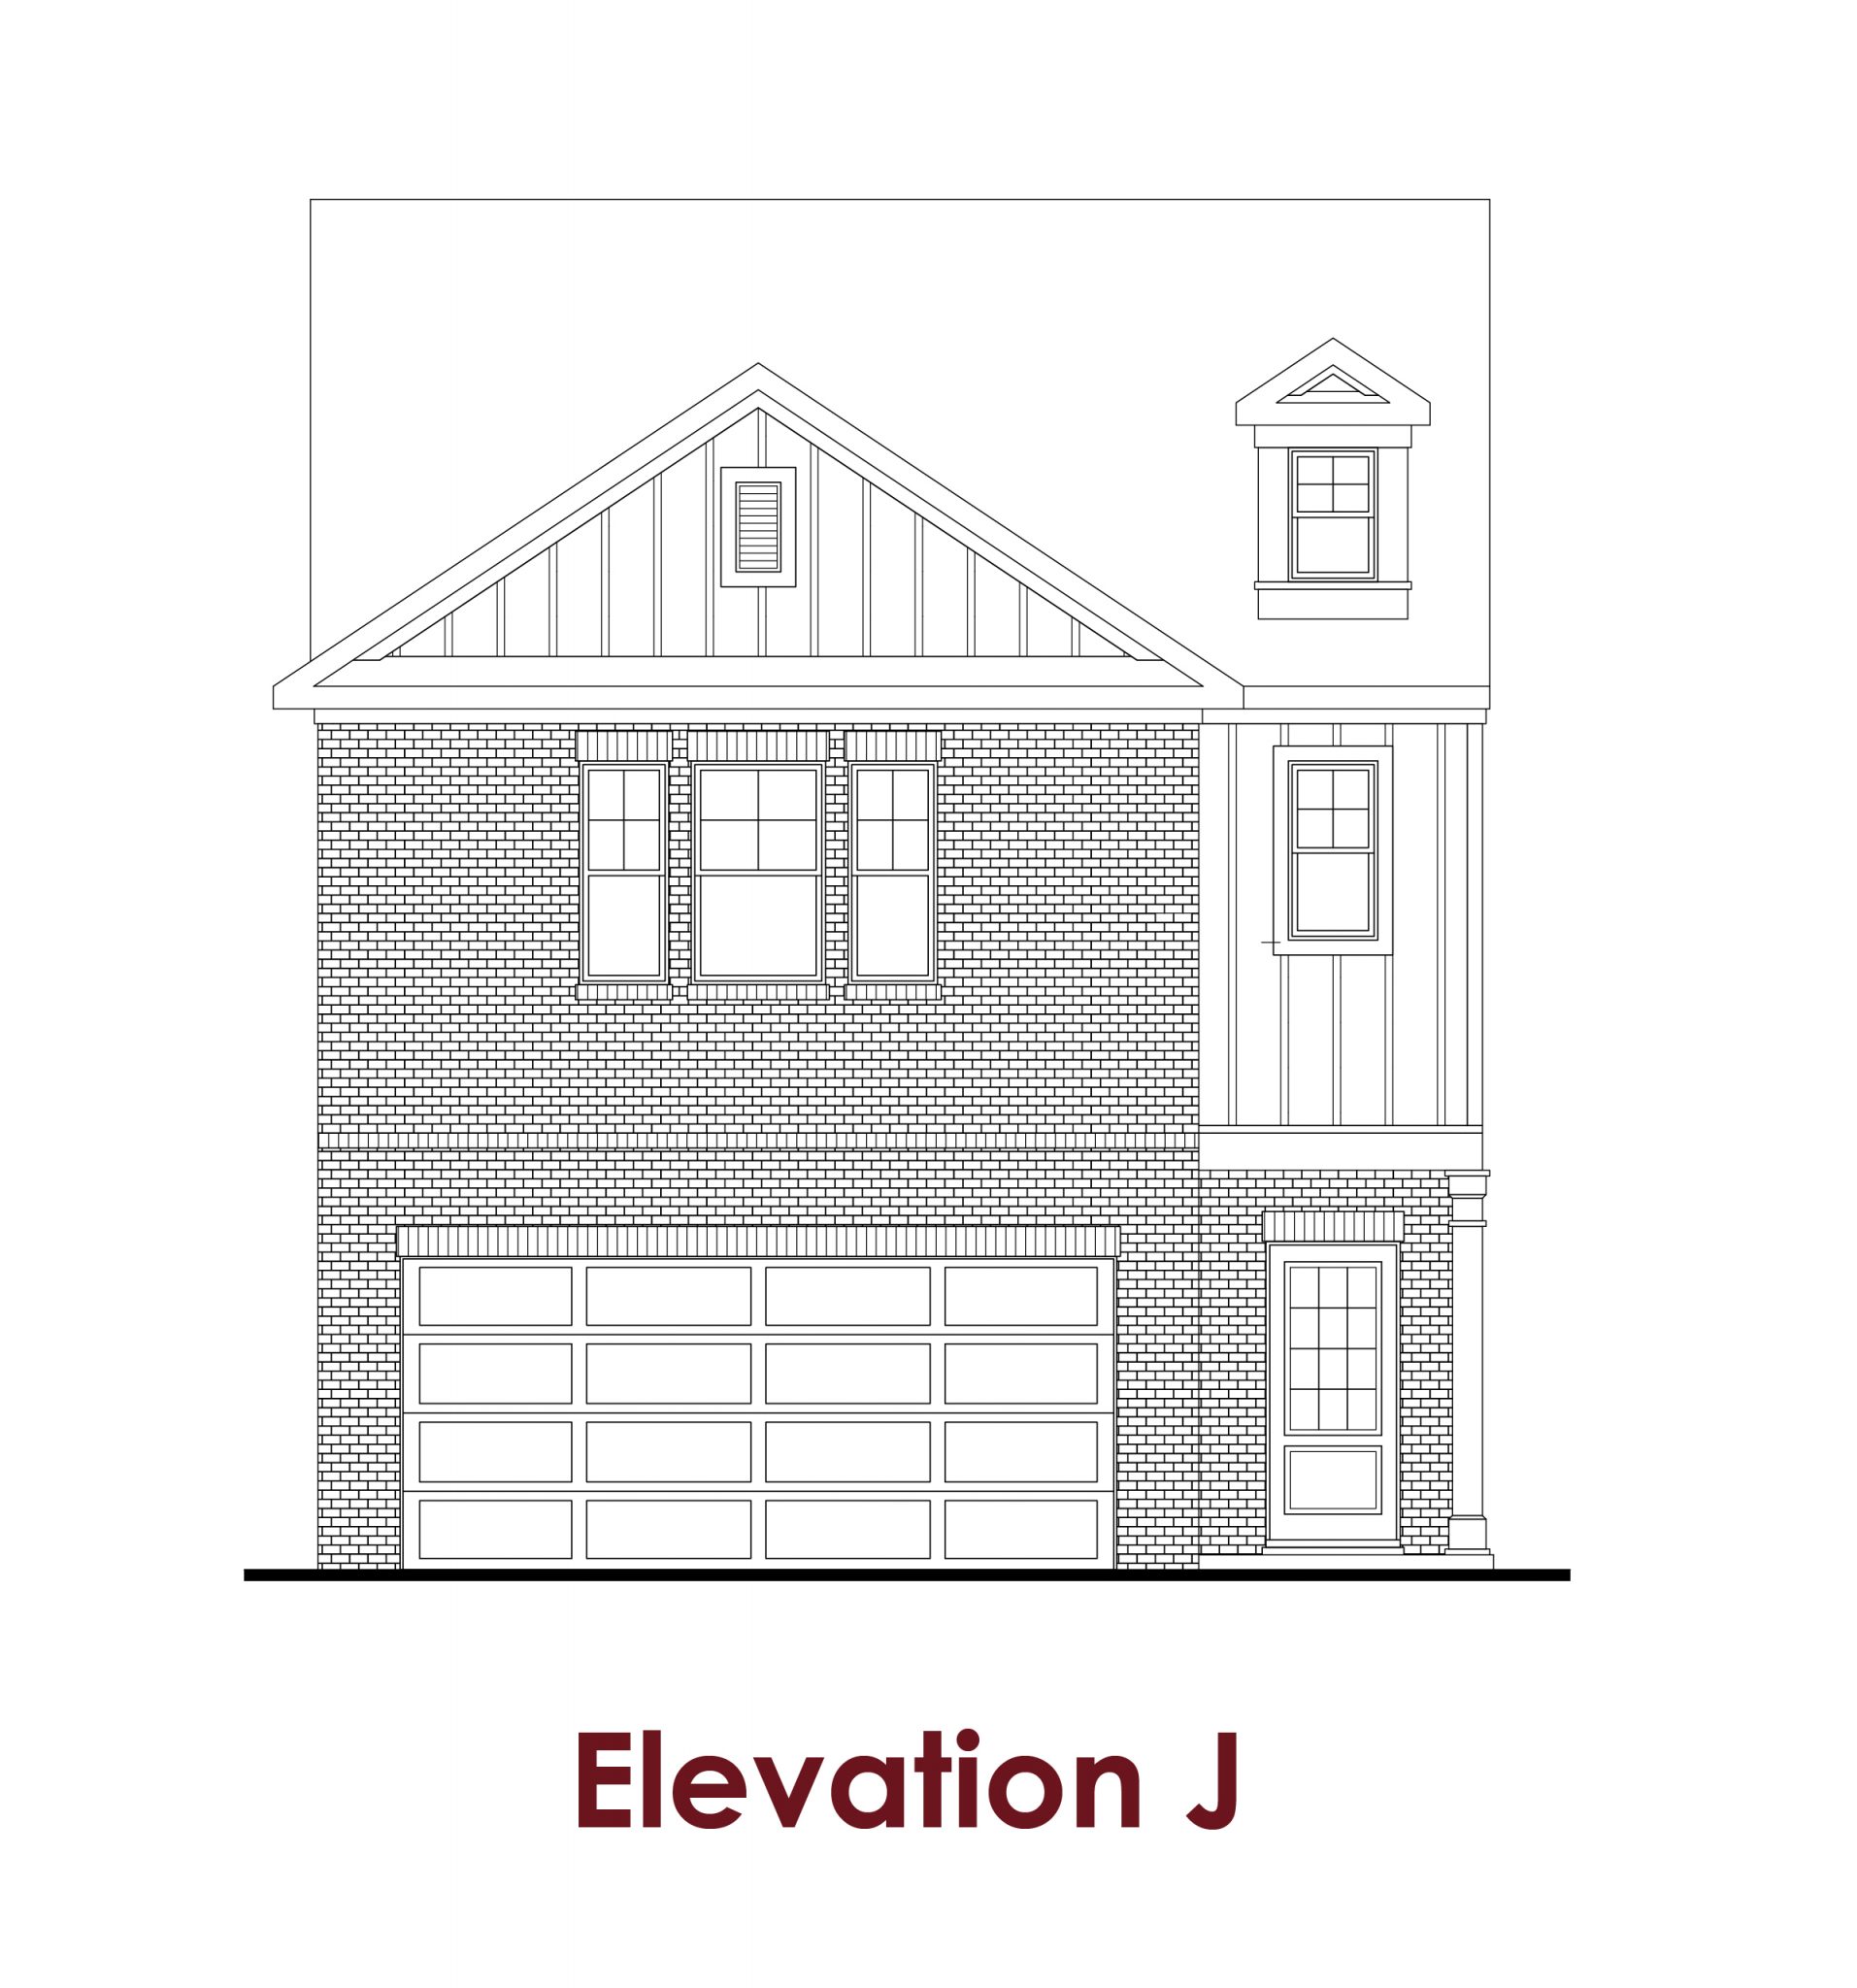 Davenport elevations Image